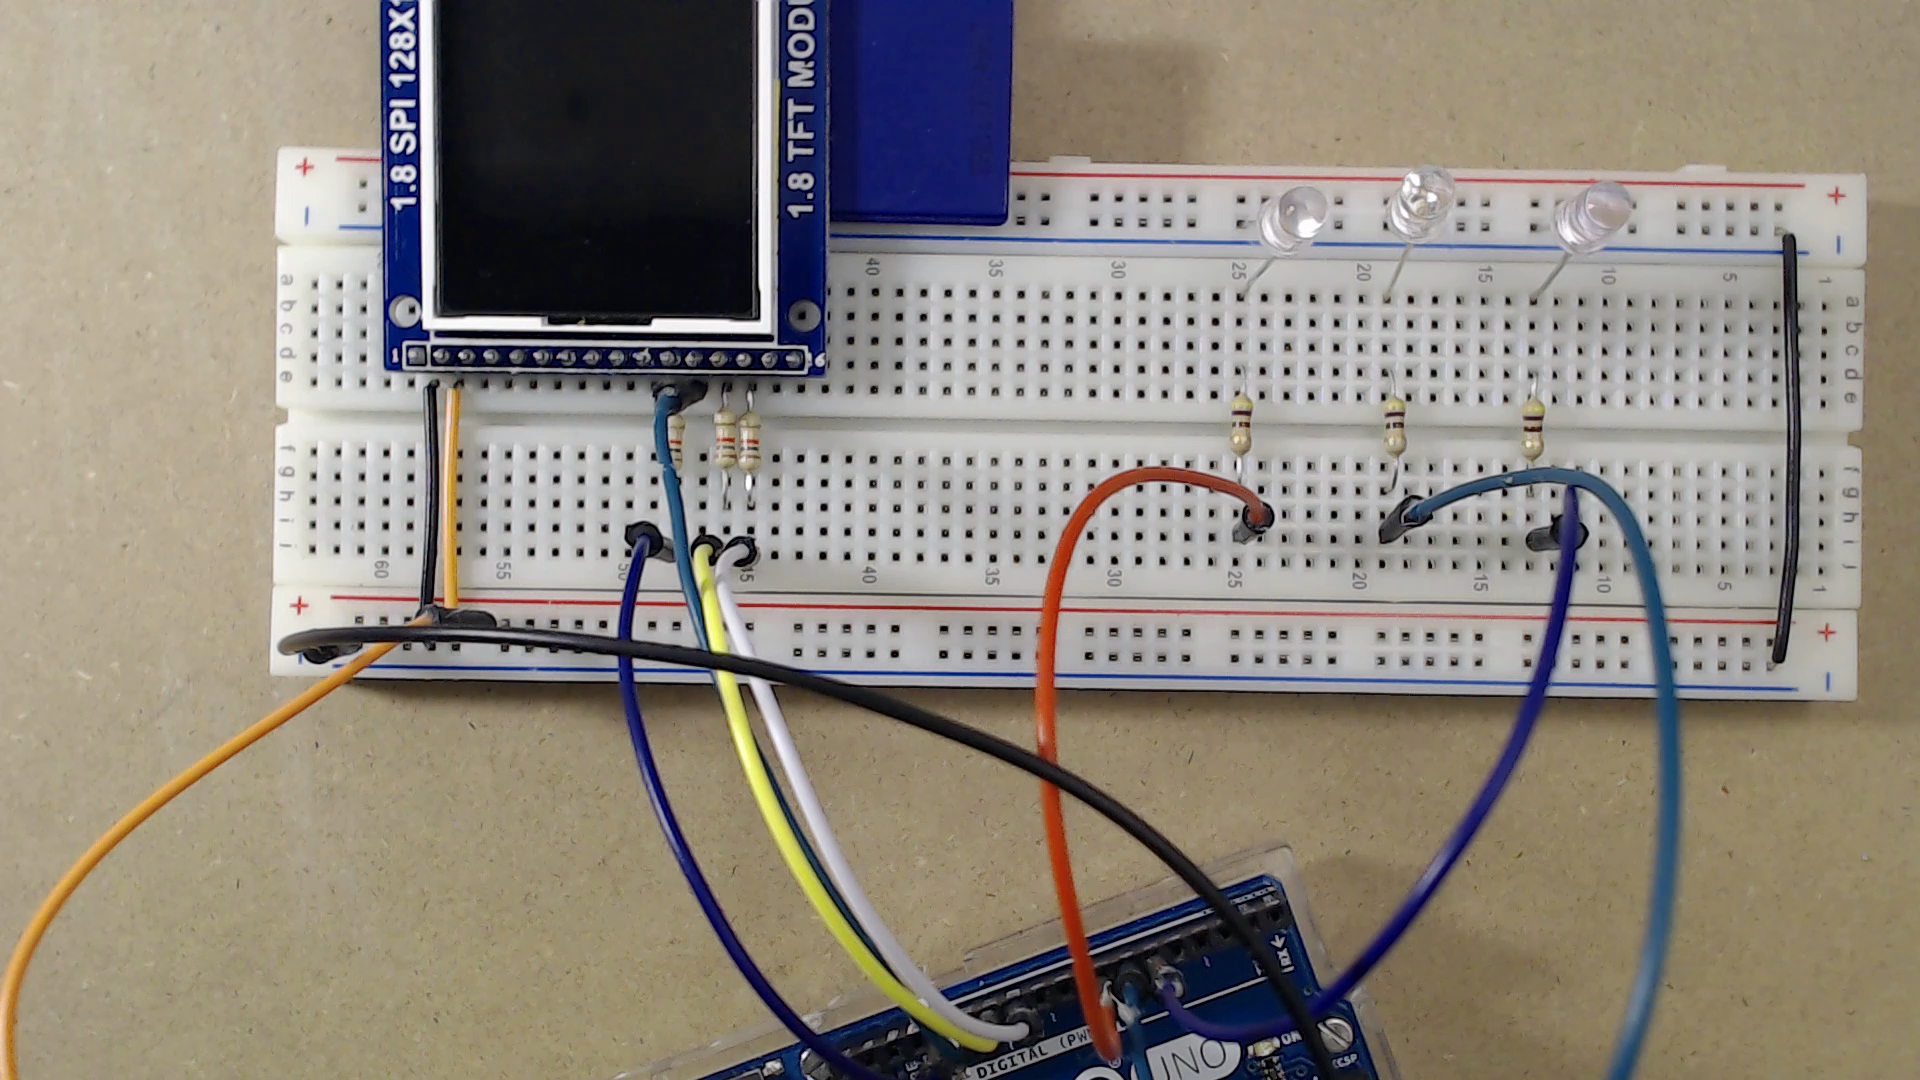 Hacked module test circuit